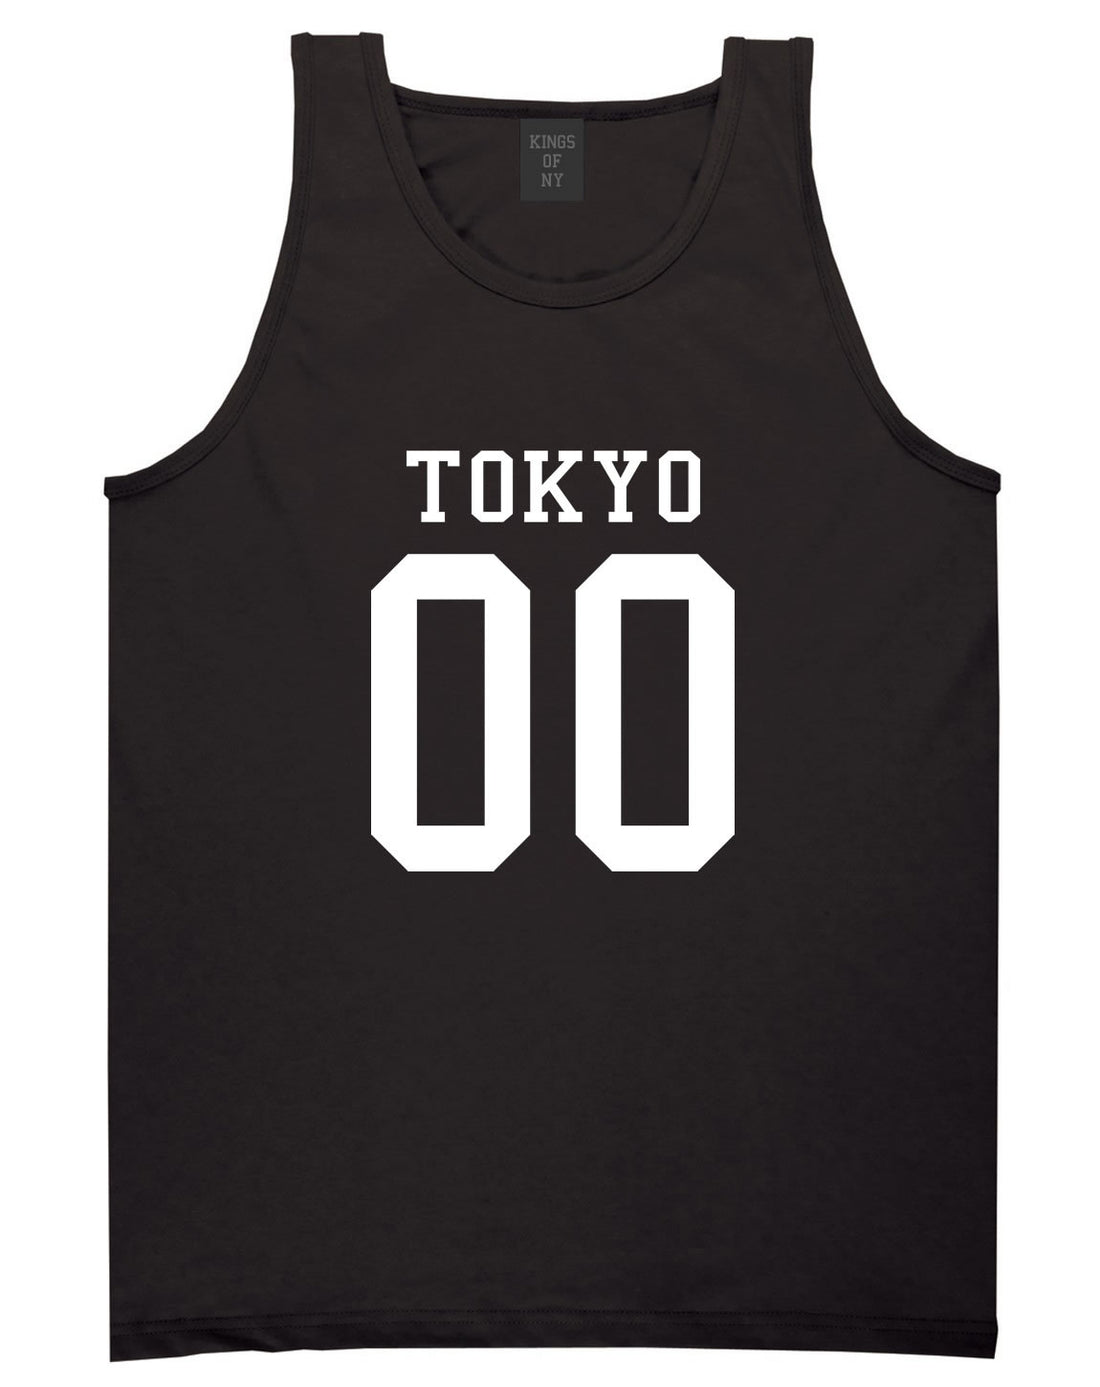 Tokyo Team 00 Jersey Japan Tank Top in Black By Kings Of NY